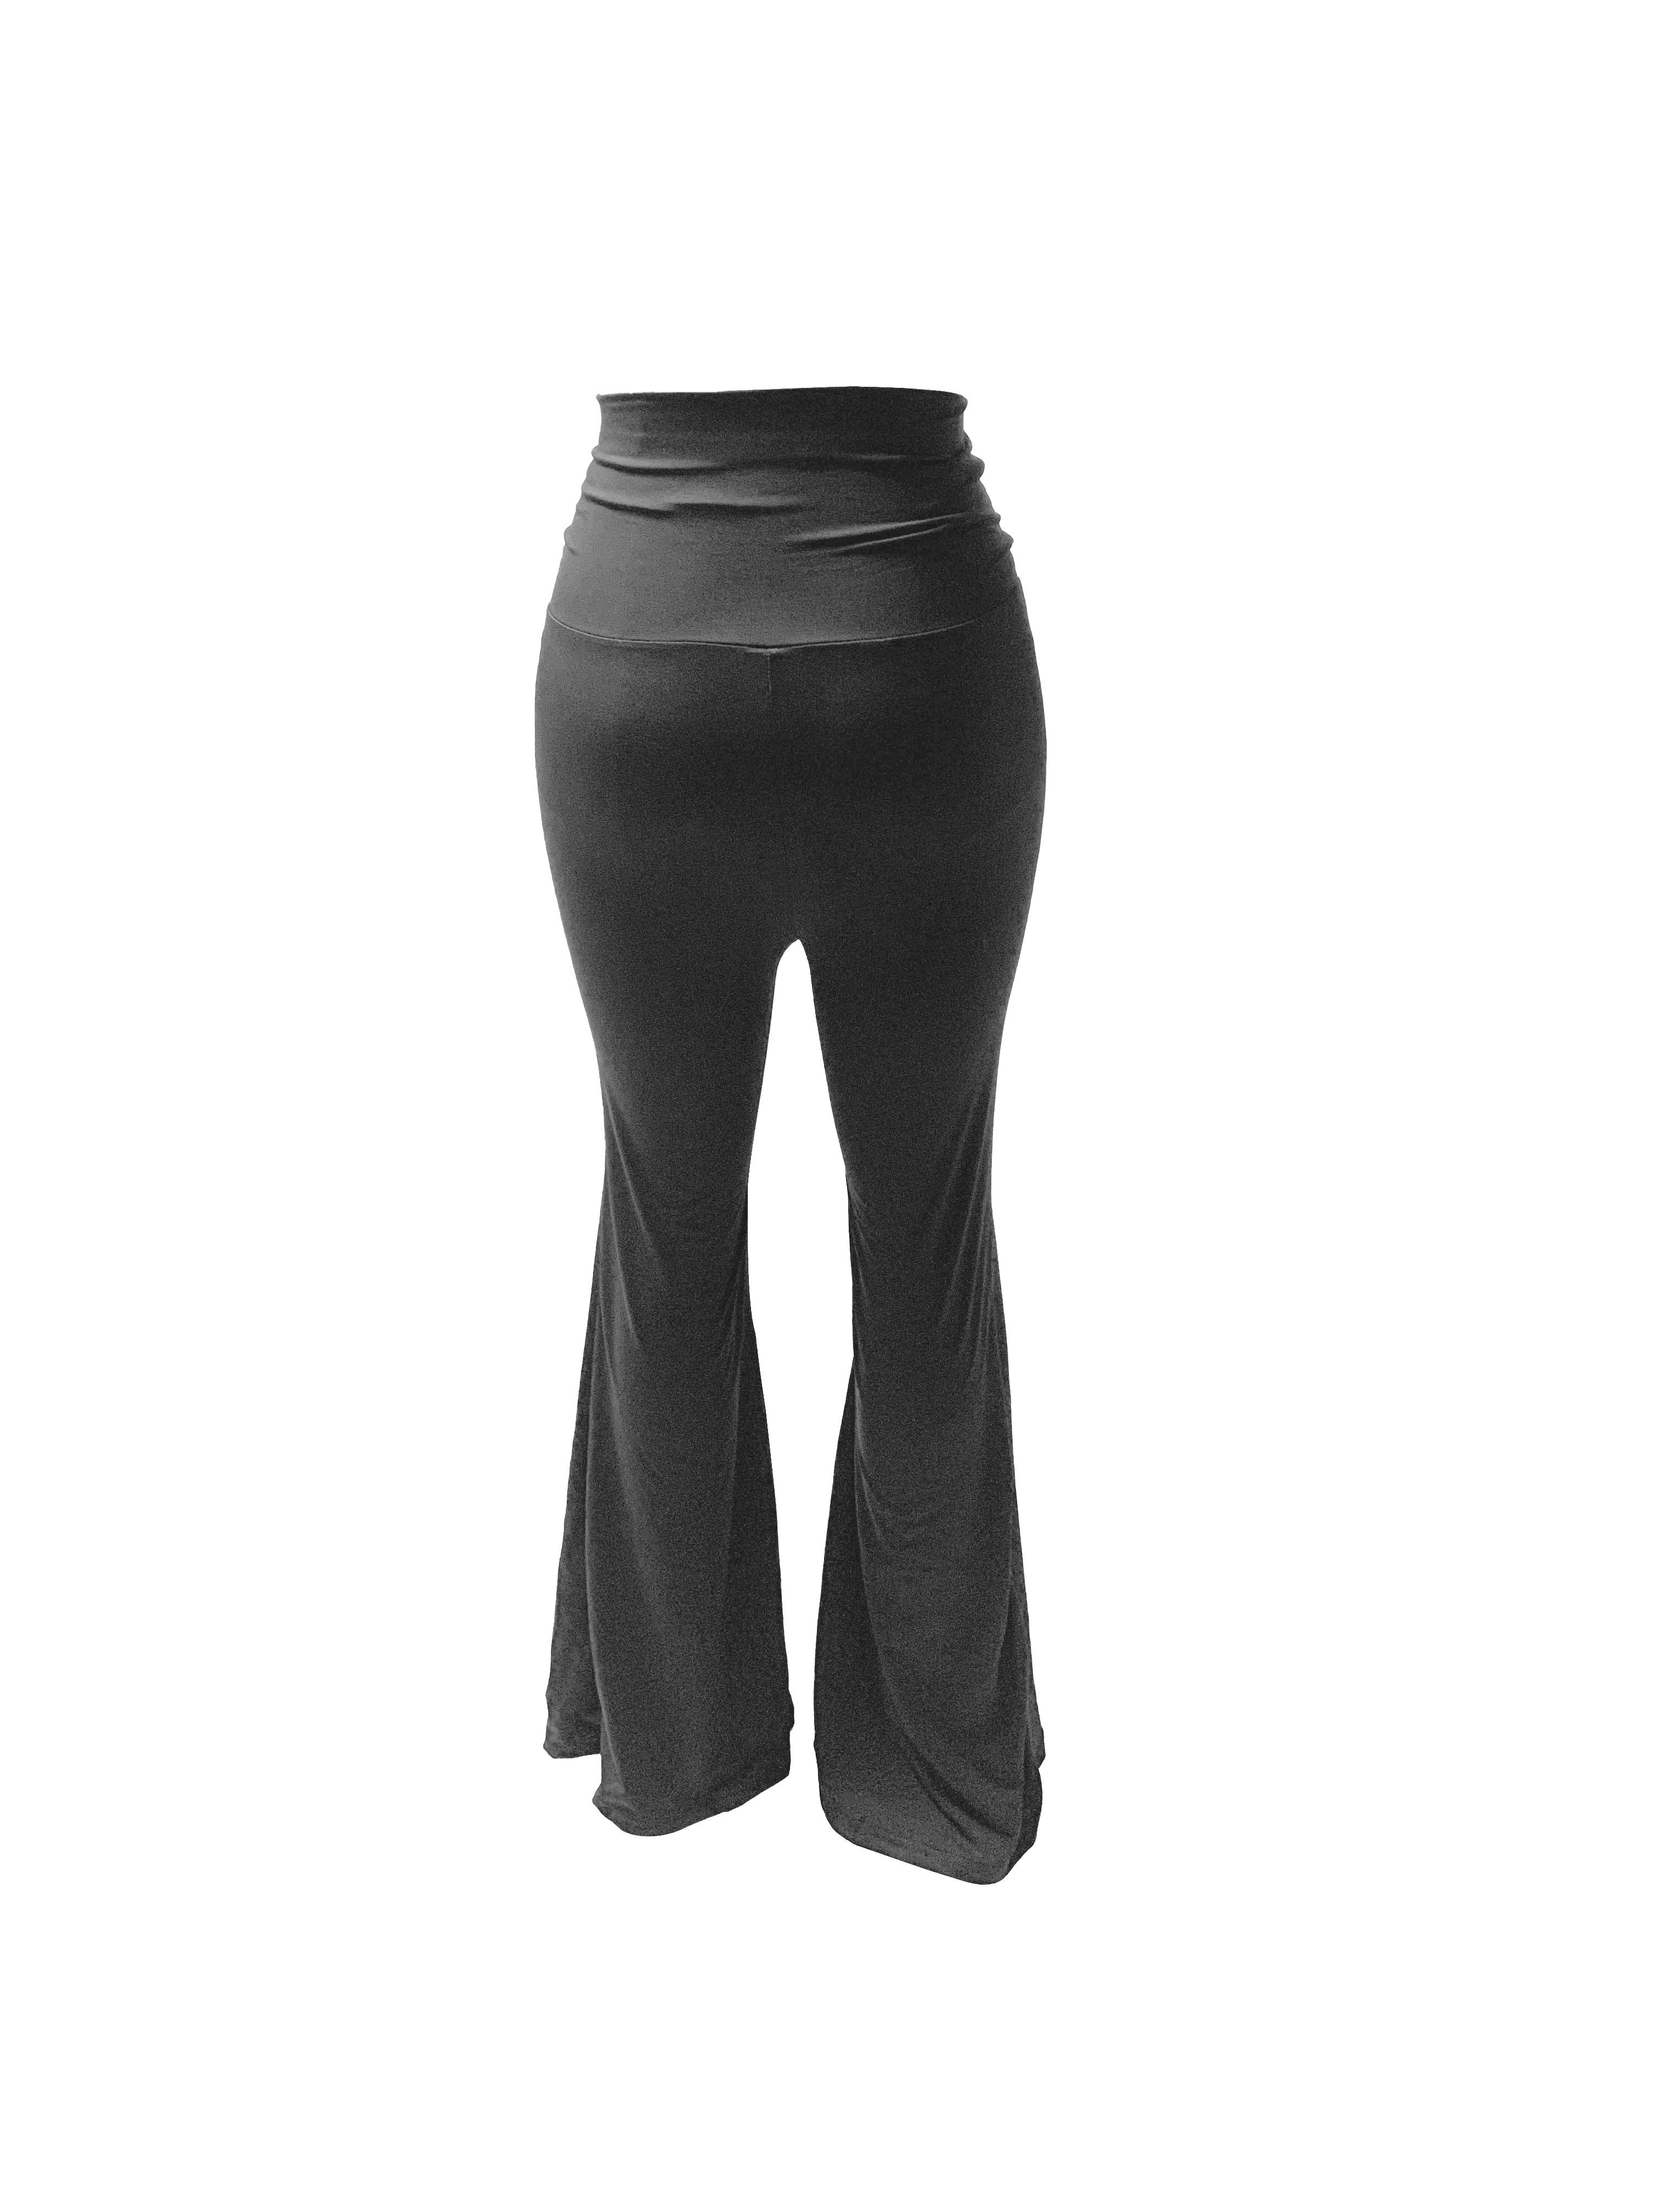 Legging Cotton Lycra Yoga Pants Solid Fabric Stretchable Designer Women's  Wear